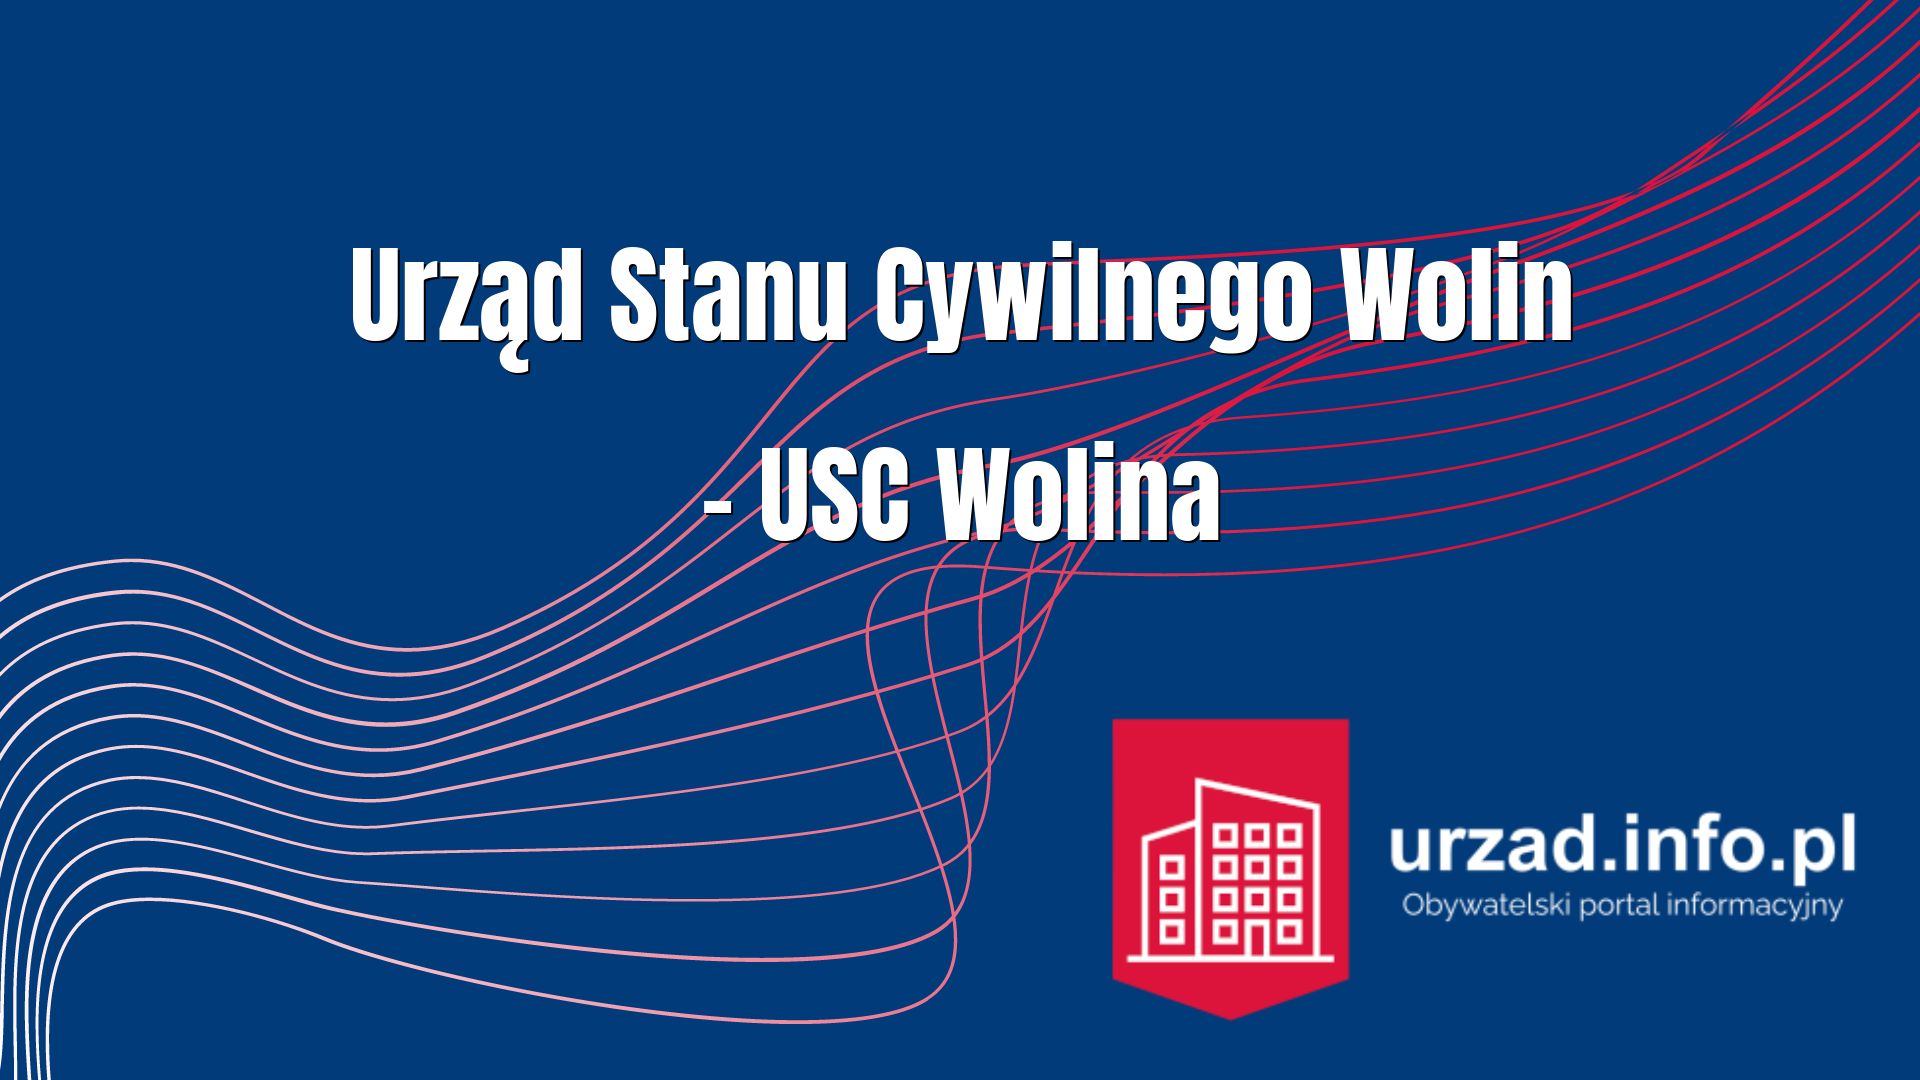 Urząd Stanu Cywilnego Wolin – USC Wolina